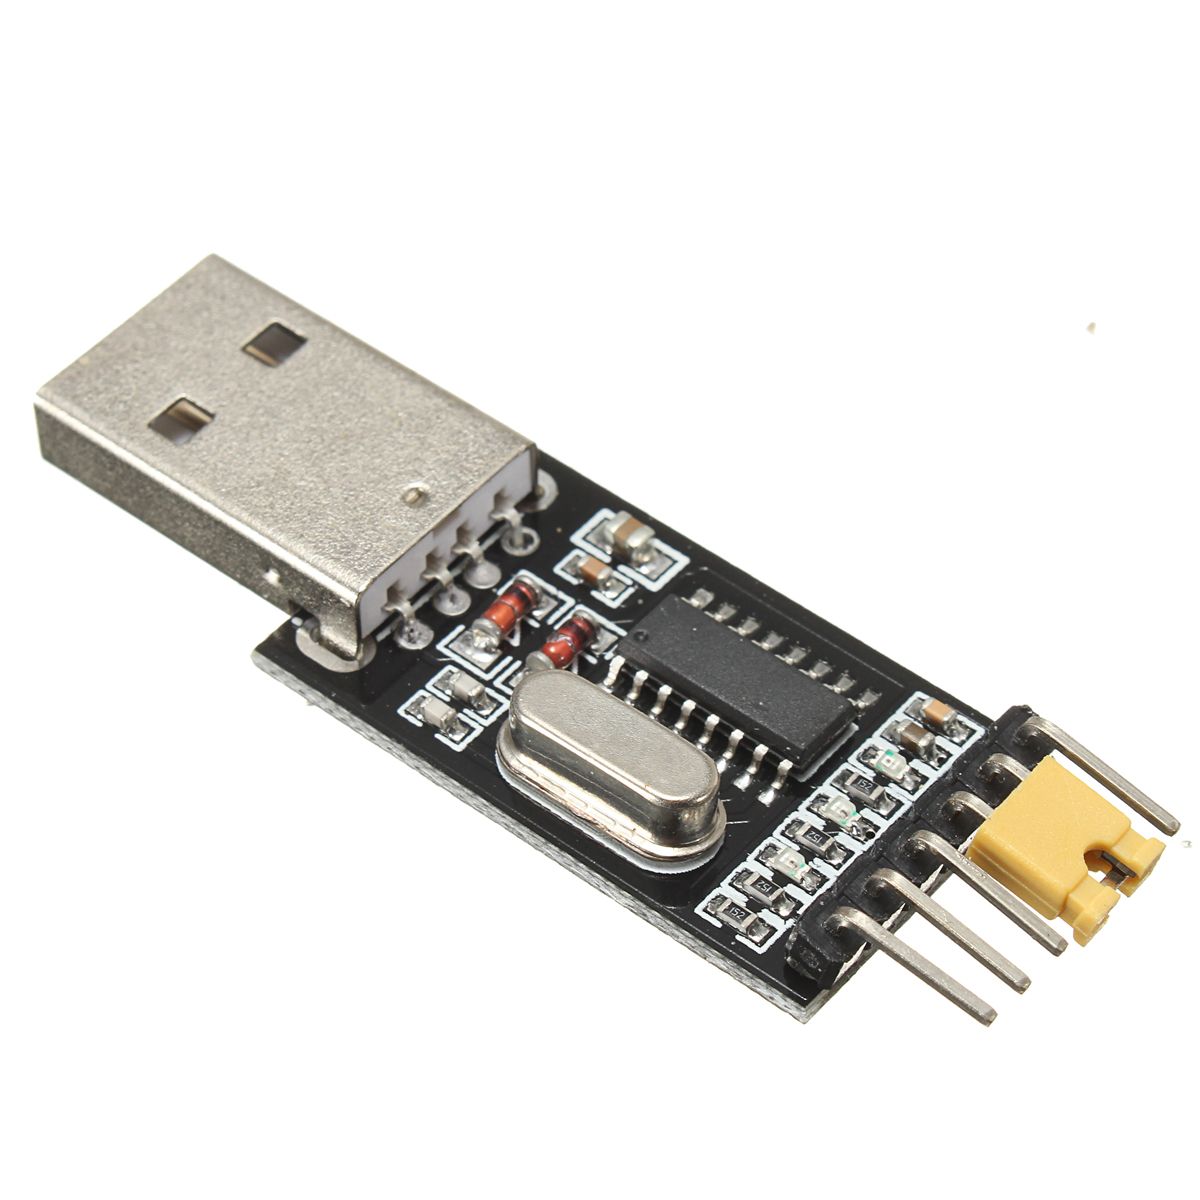 10pcs-33V-5V-USB-to-TTL-Converter-CH340G-UART-Serial-Adapter-Module-STC-1314967